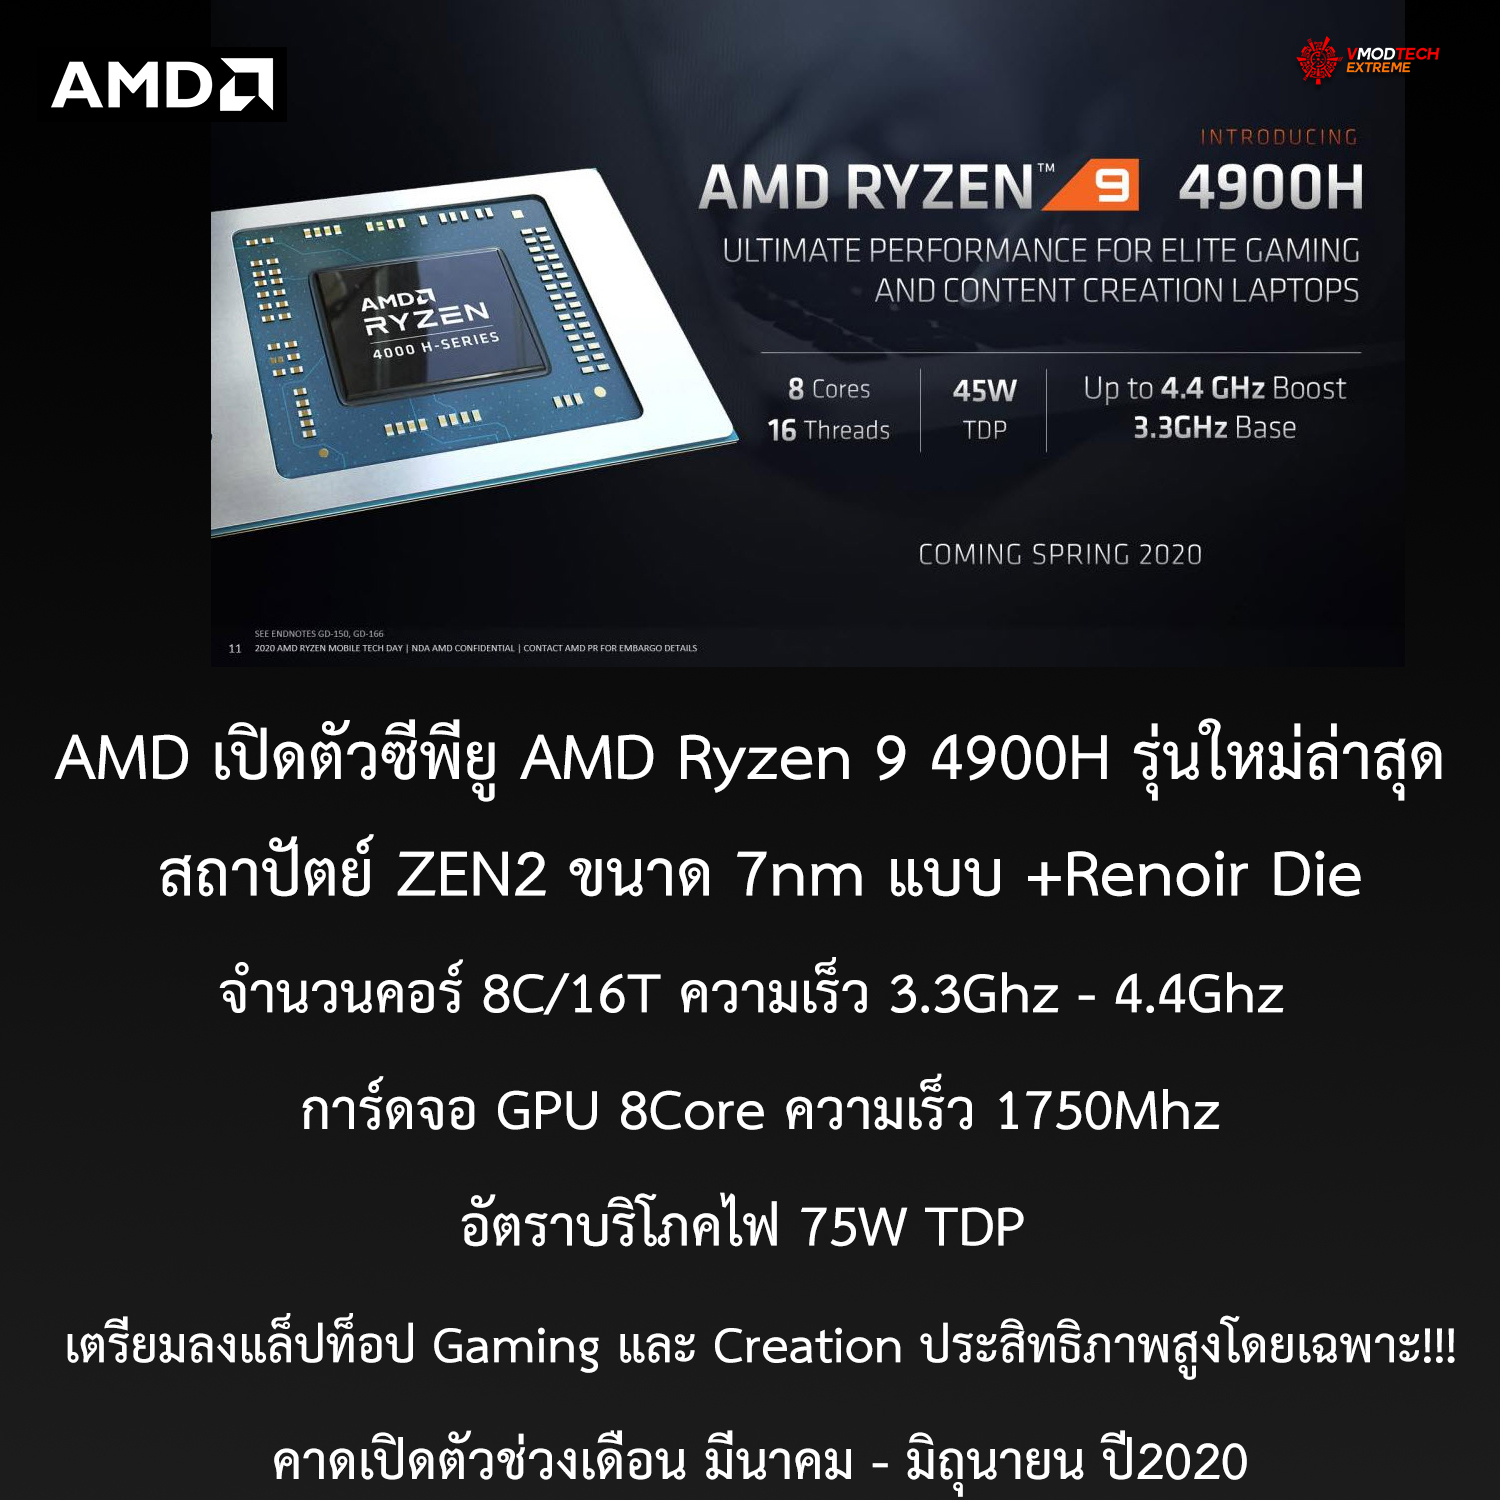 amd ryzen 9 4900h AMD เปิดตัวซีพียู AMD Ryzen 9 4900H รุ่นใหม่ล่าสุด 8C/16T ความเร็ว 4.4Ghz GPU 8Core ความเร็ว 1750Mhz เตรียมลง Gaming แล็ปท็อปและ Creation แล็ปท็อปประสิทธิภาพสูงโดยเฉพาะ!!!